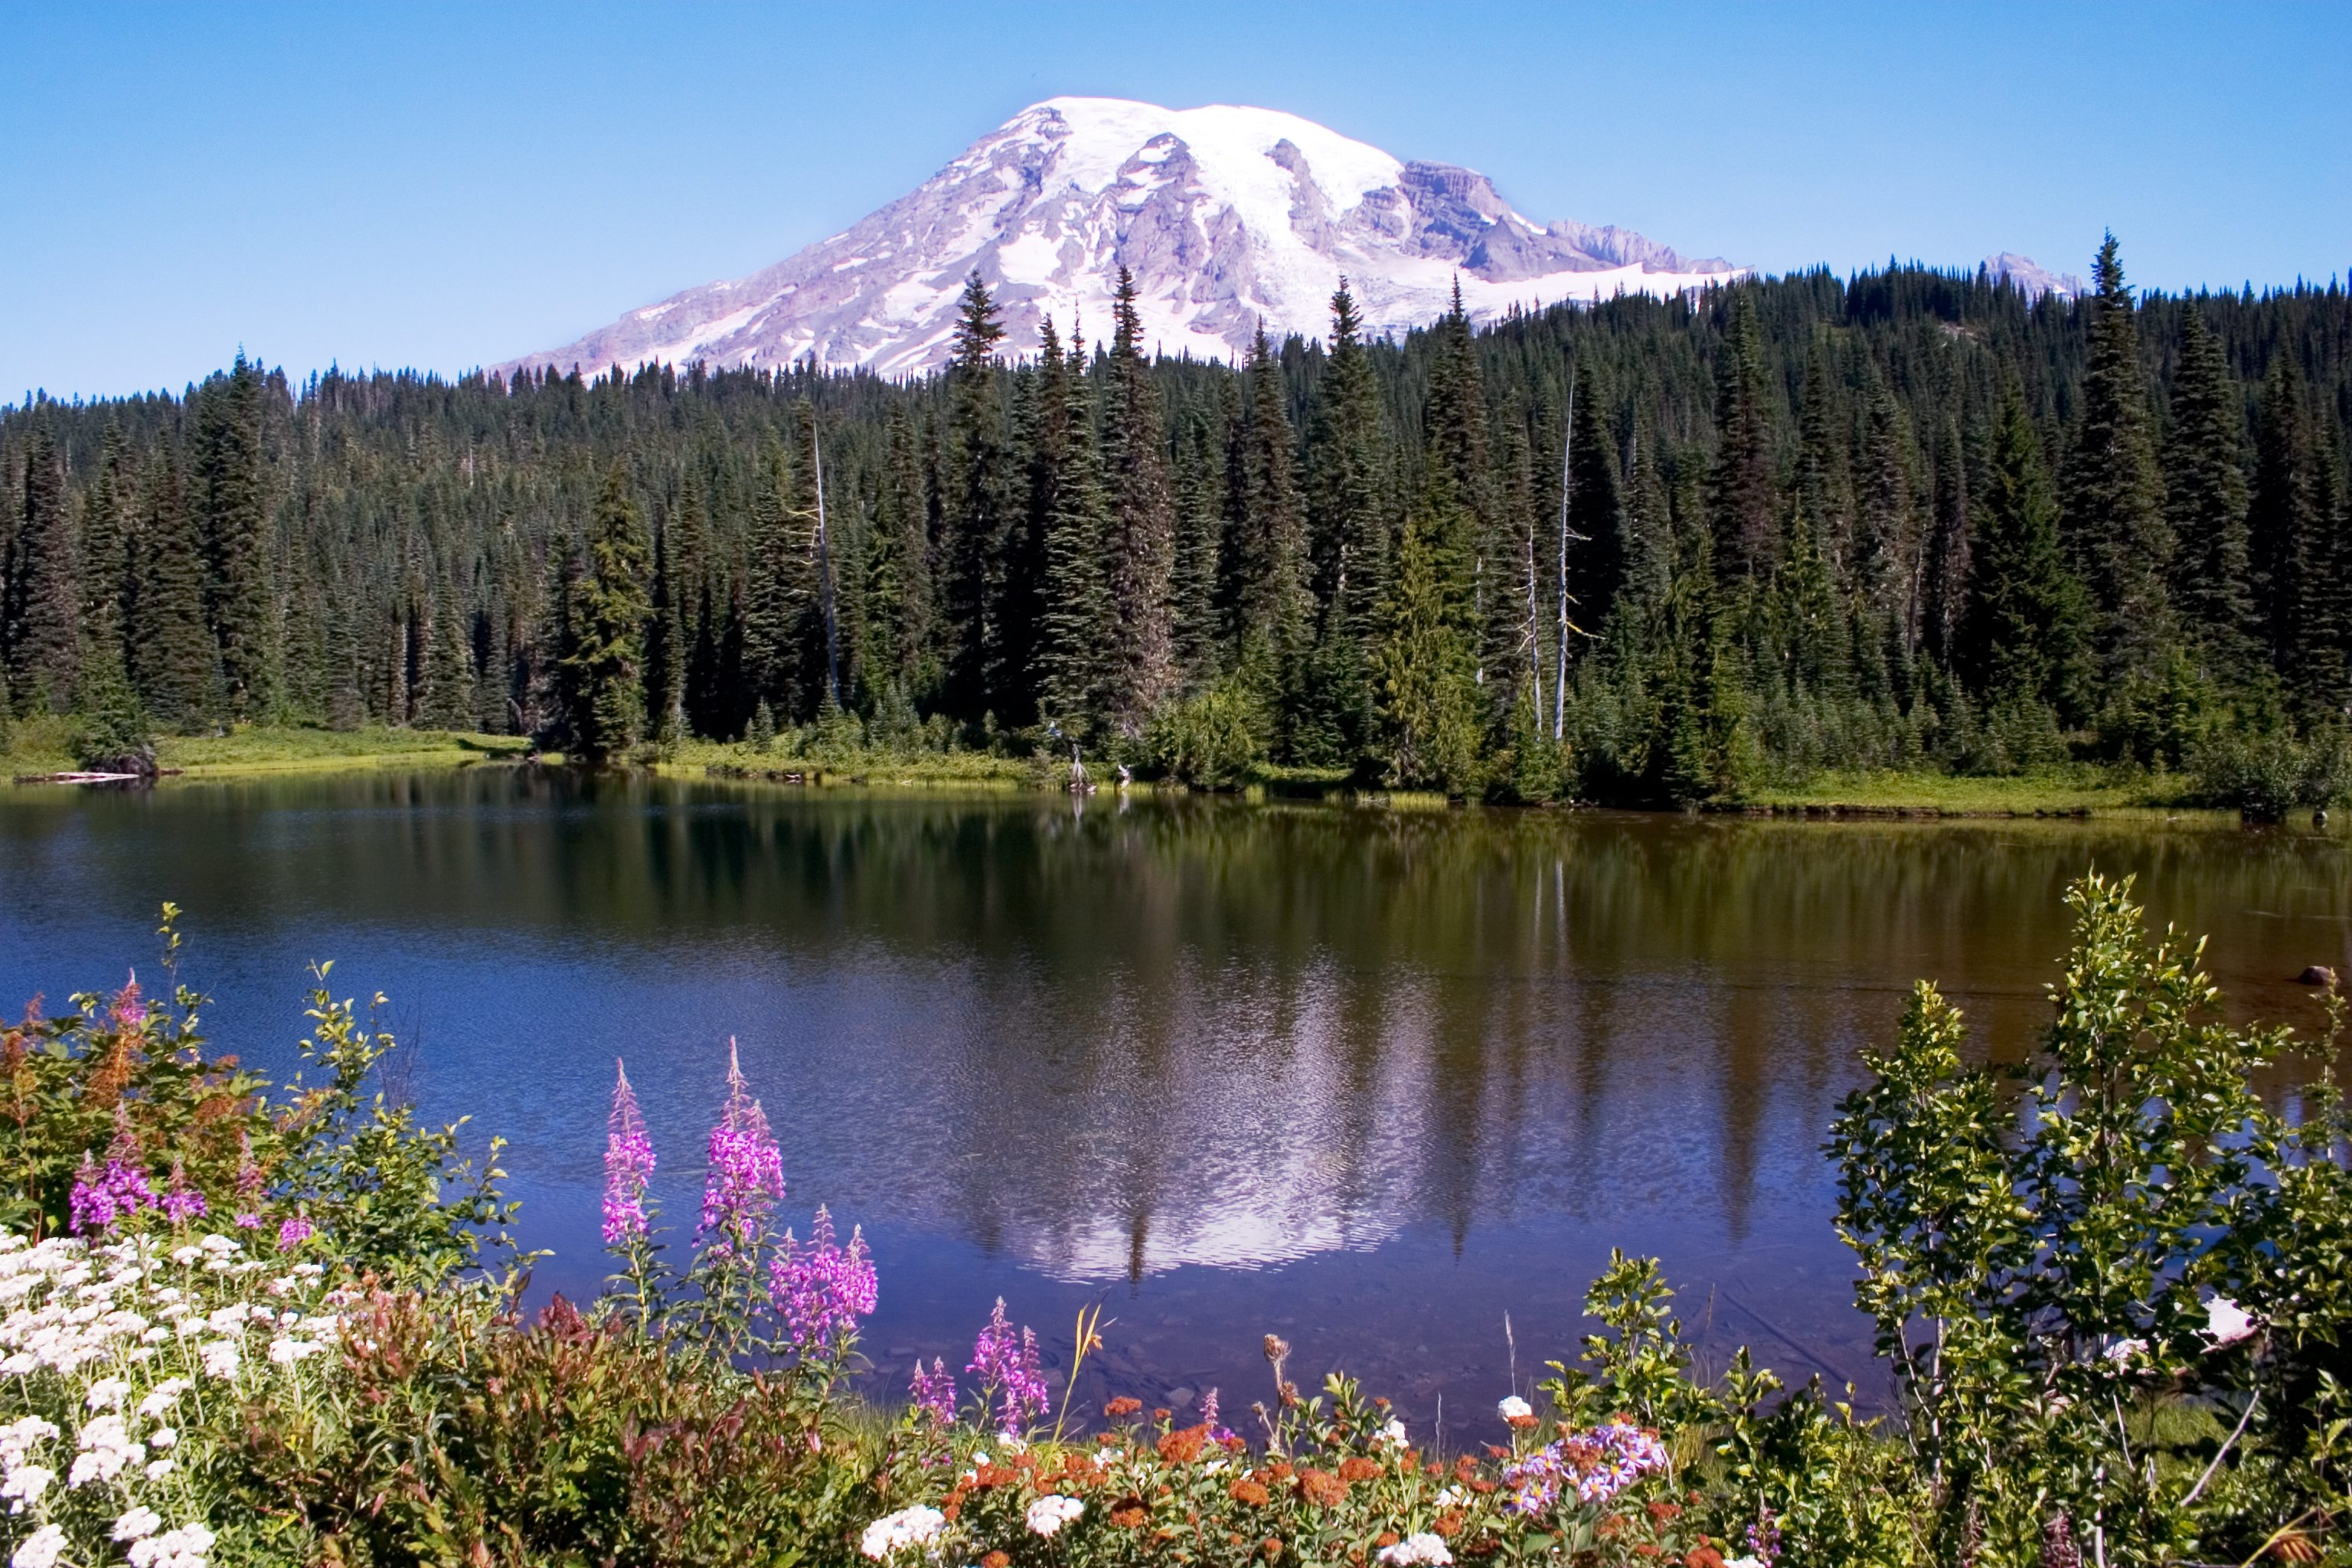 image_caption= Mount Rainier in Washington state